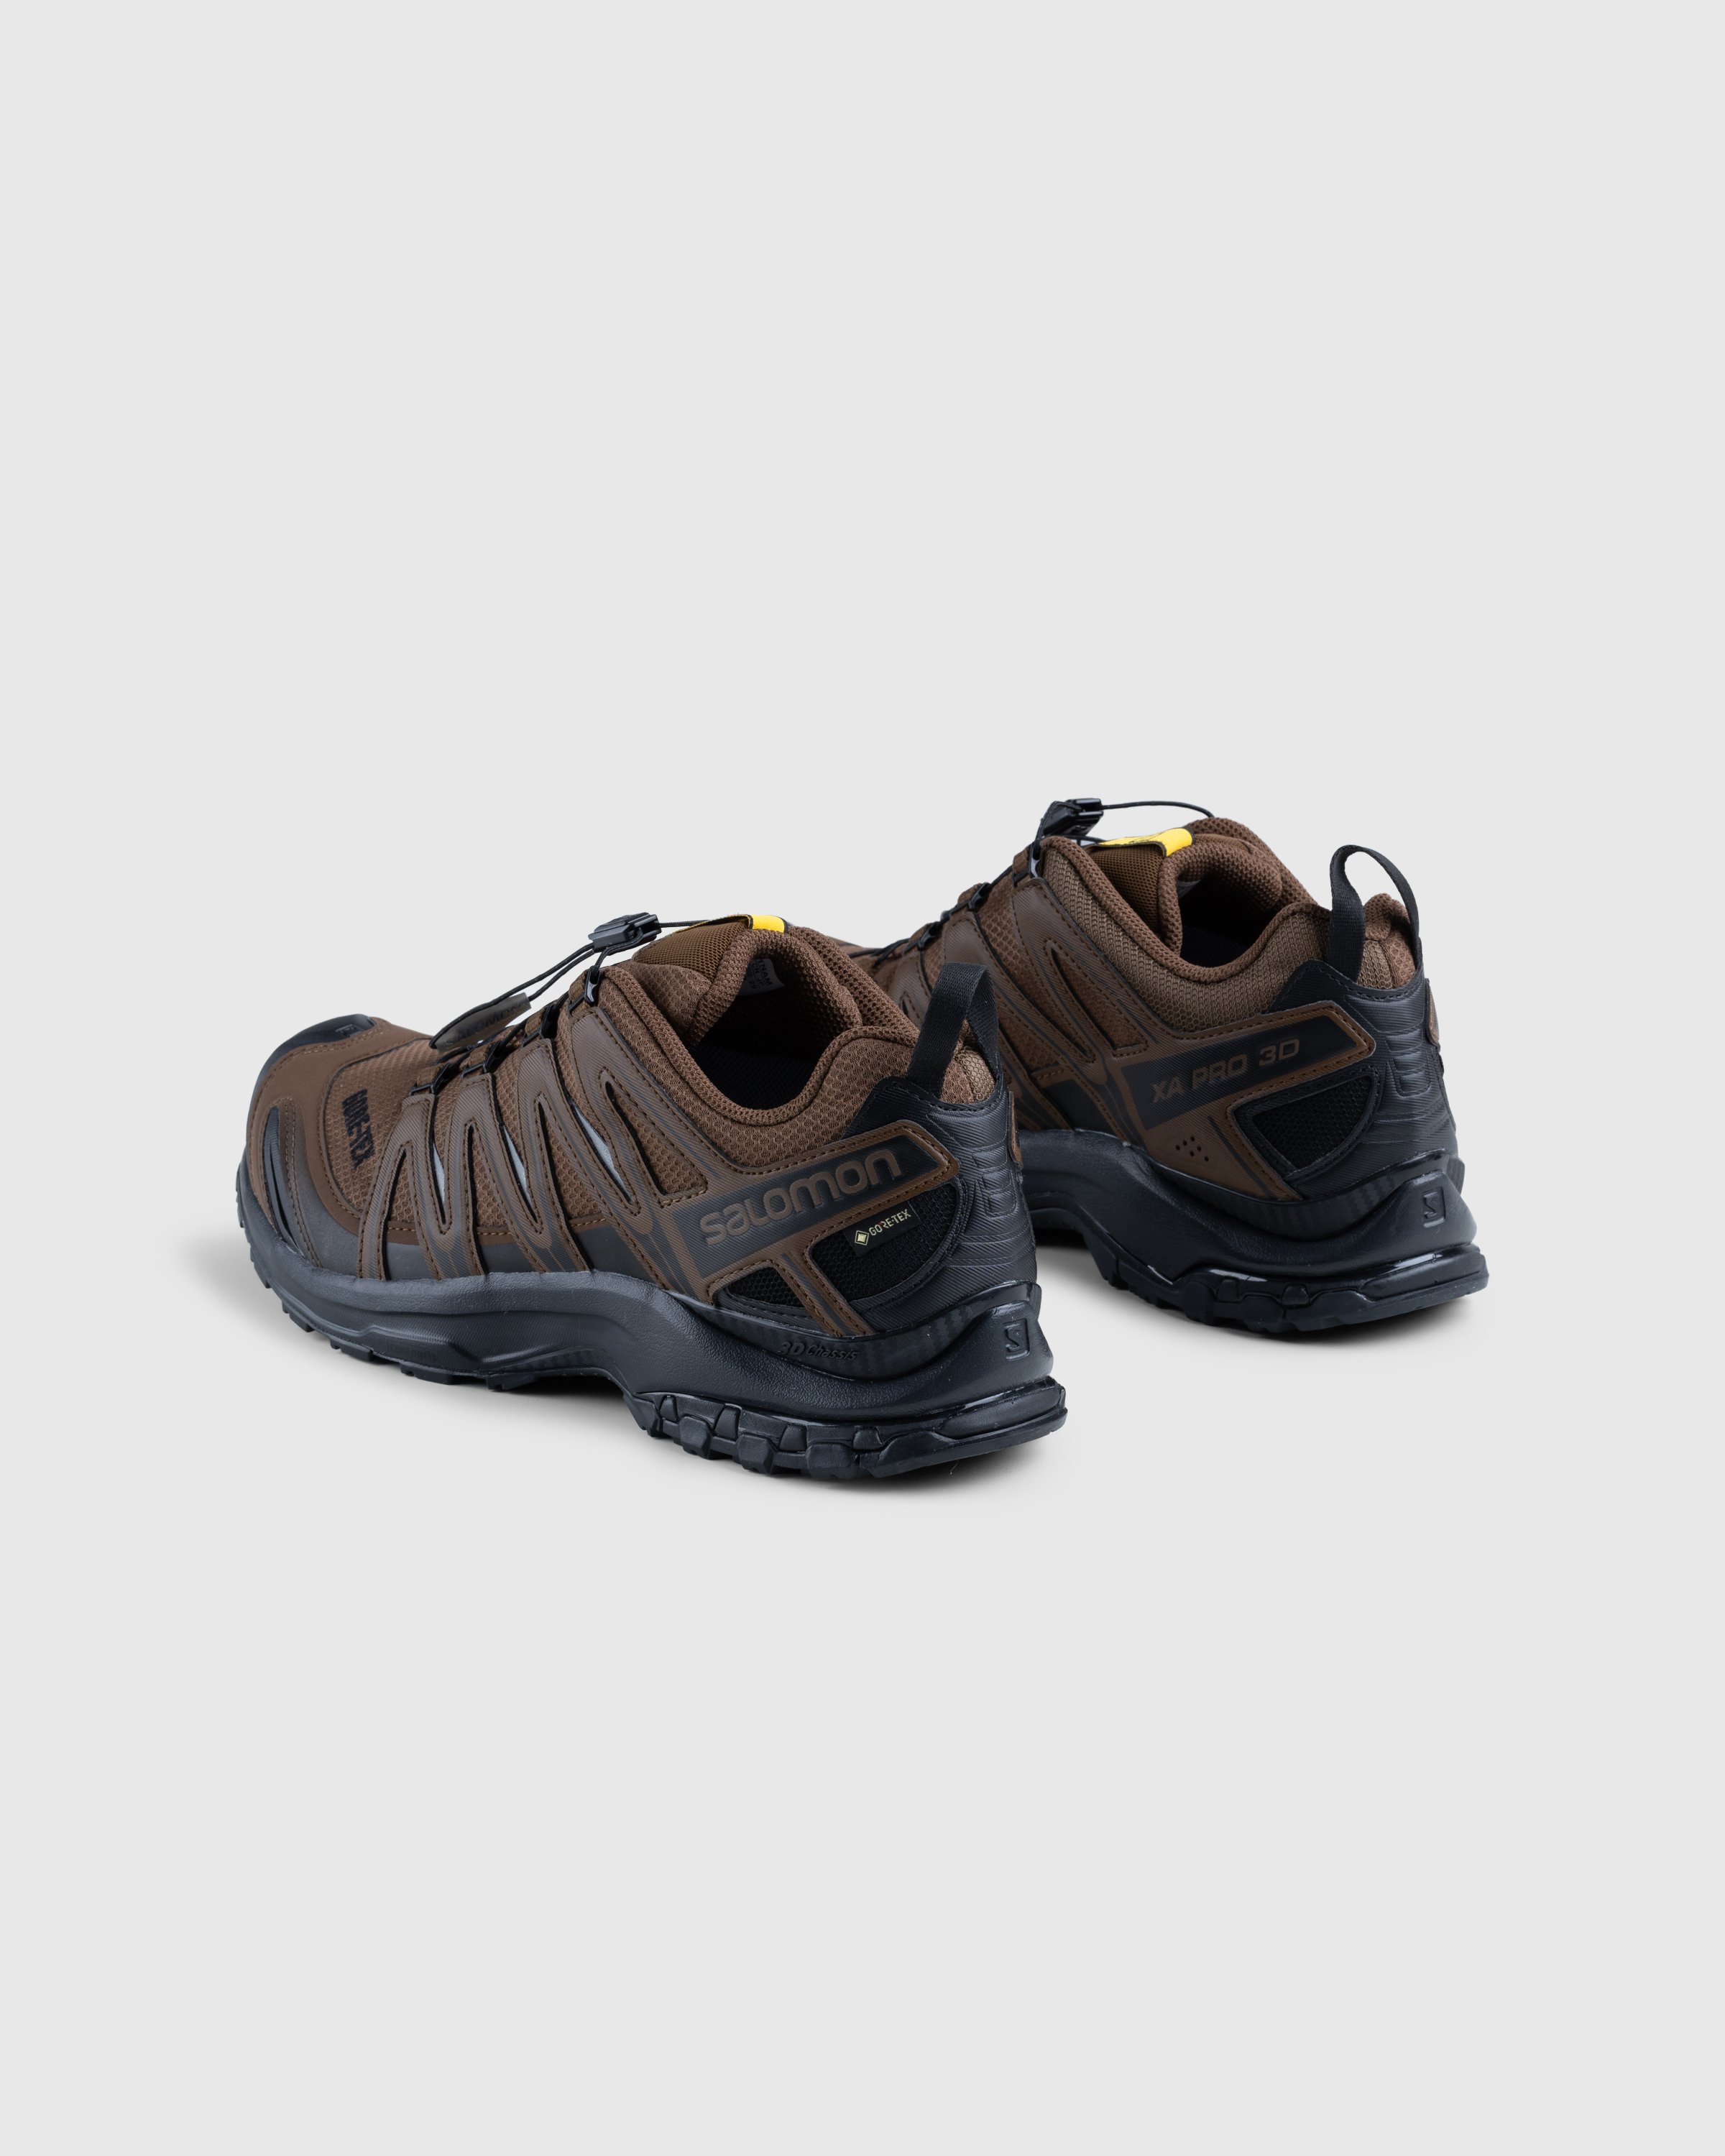 Salomon x And Wander - XA Pro 3D GORE-TEX Brown - Footwear - Brown - Image 4